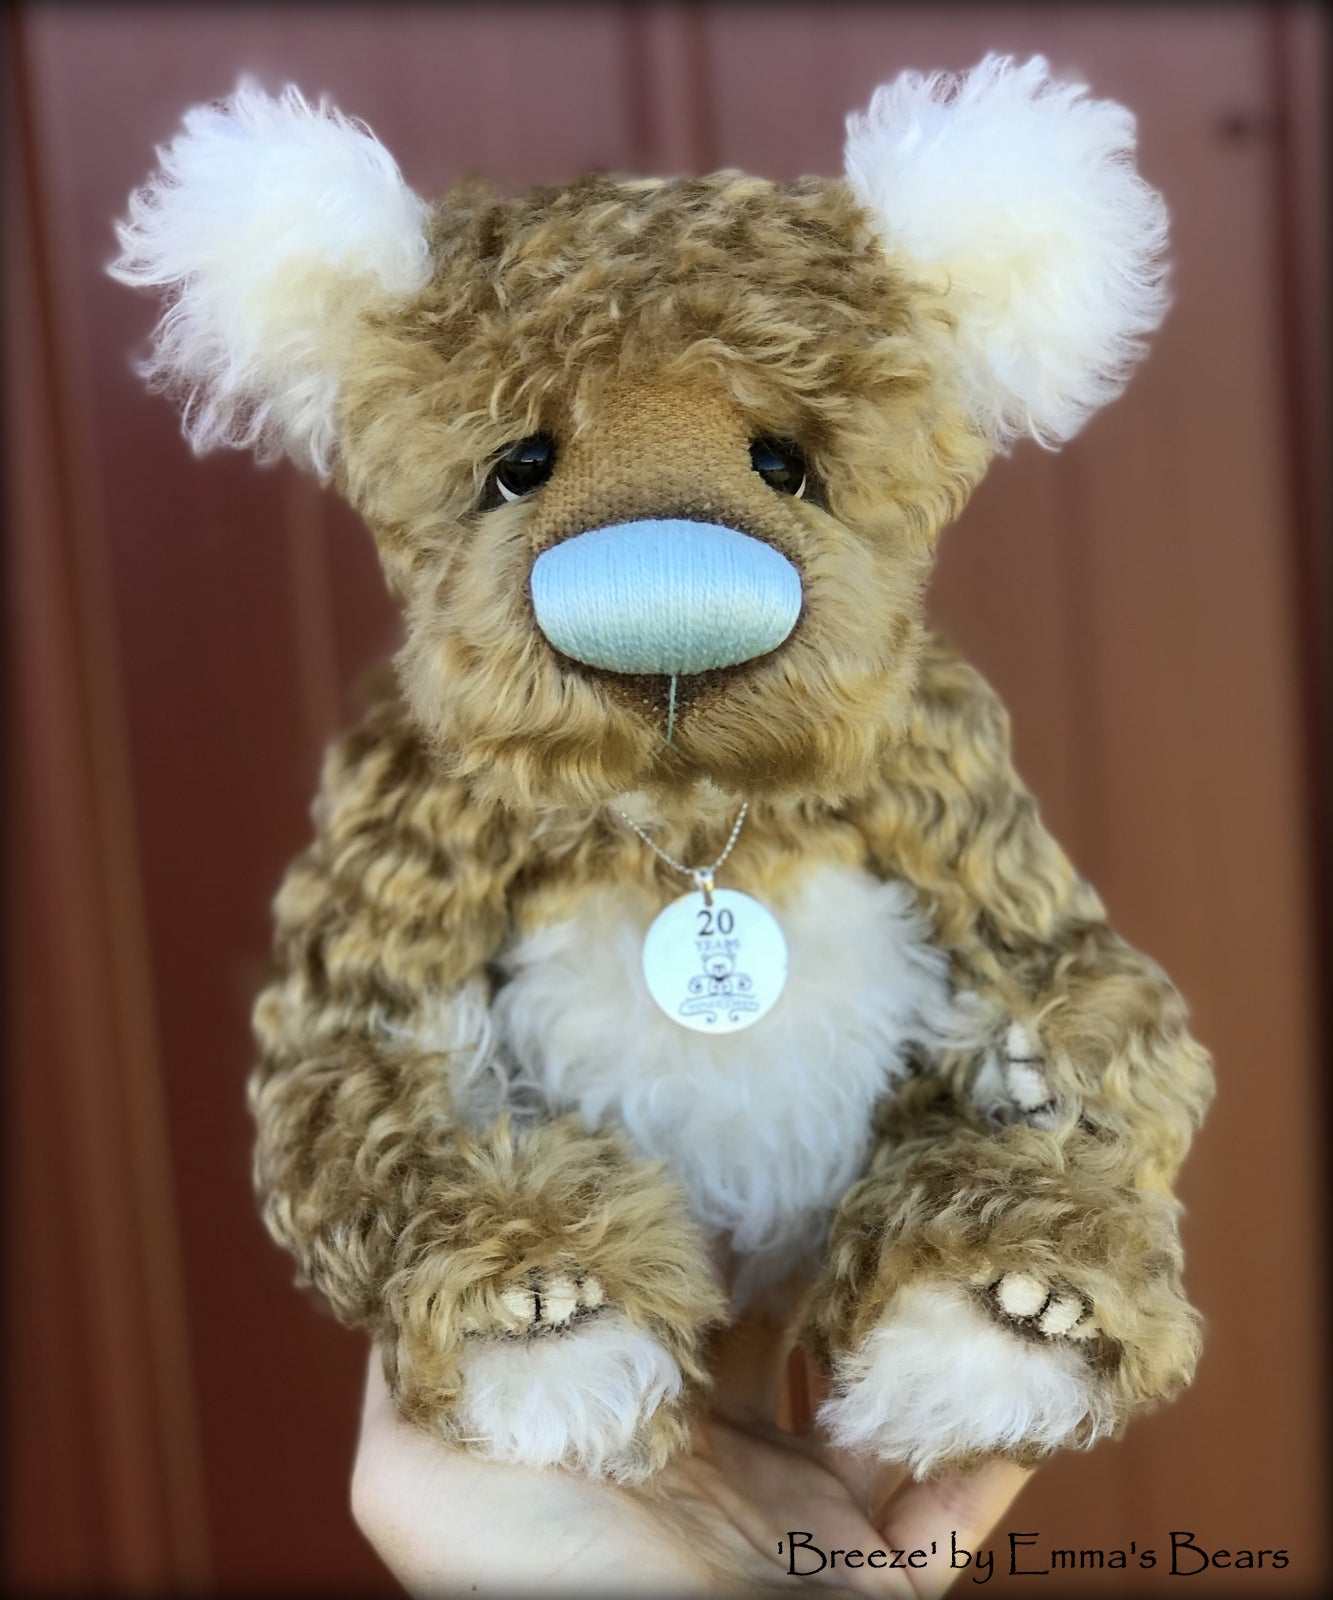 Breeze - 20 Years of Emma's Bears Commemorative Teddy - OOAK in a series